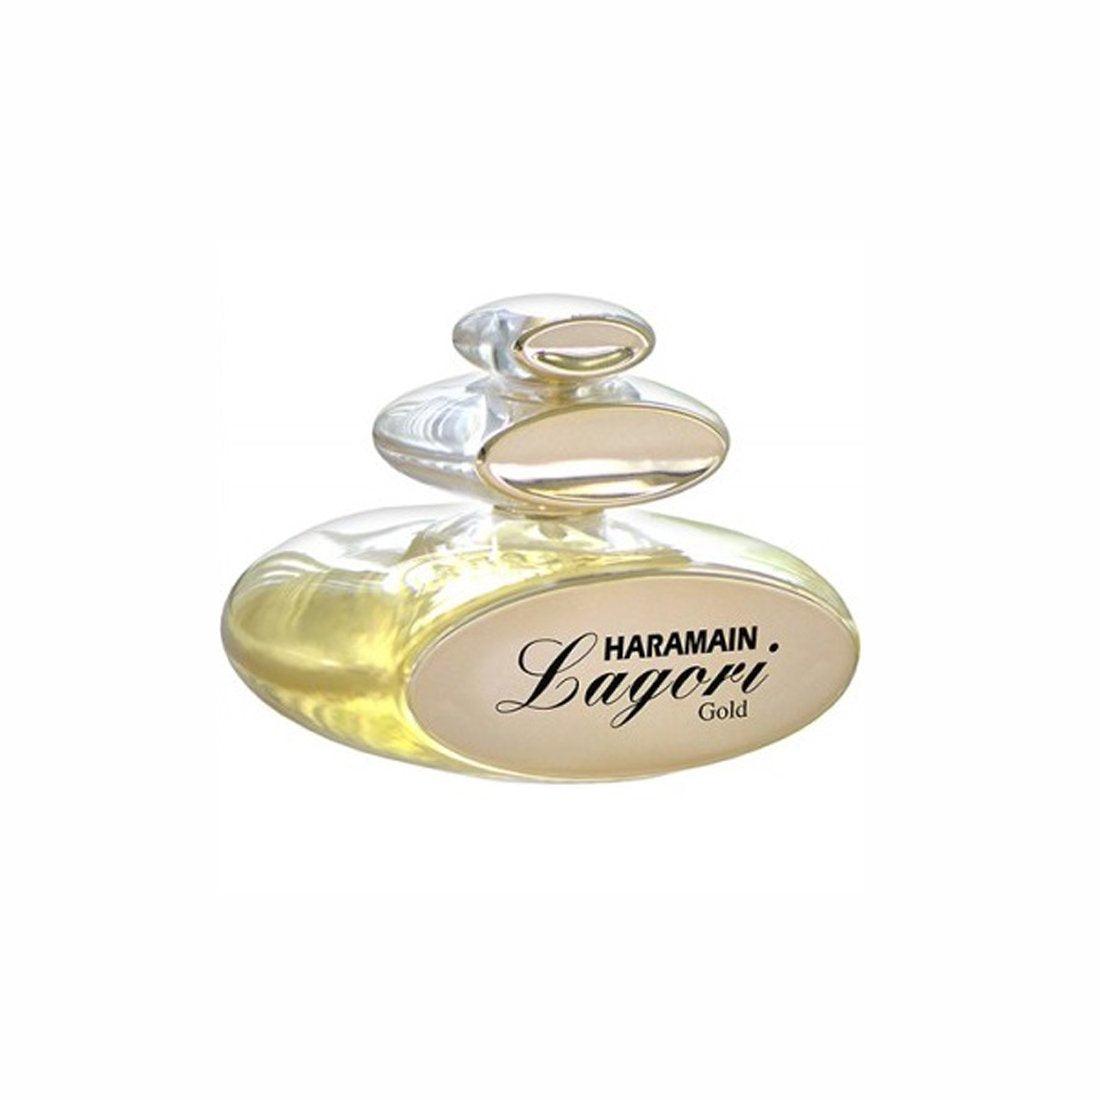 Al Haramain Lagria Gold Perfume Spray - 100 ml